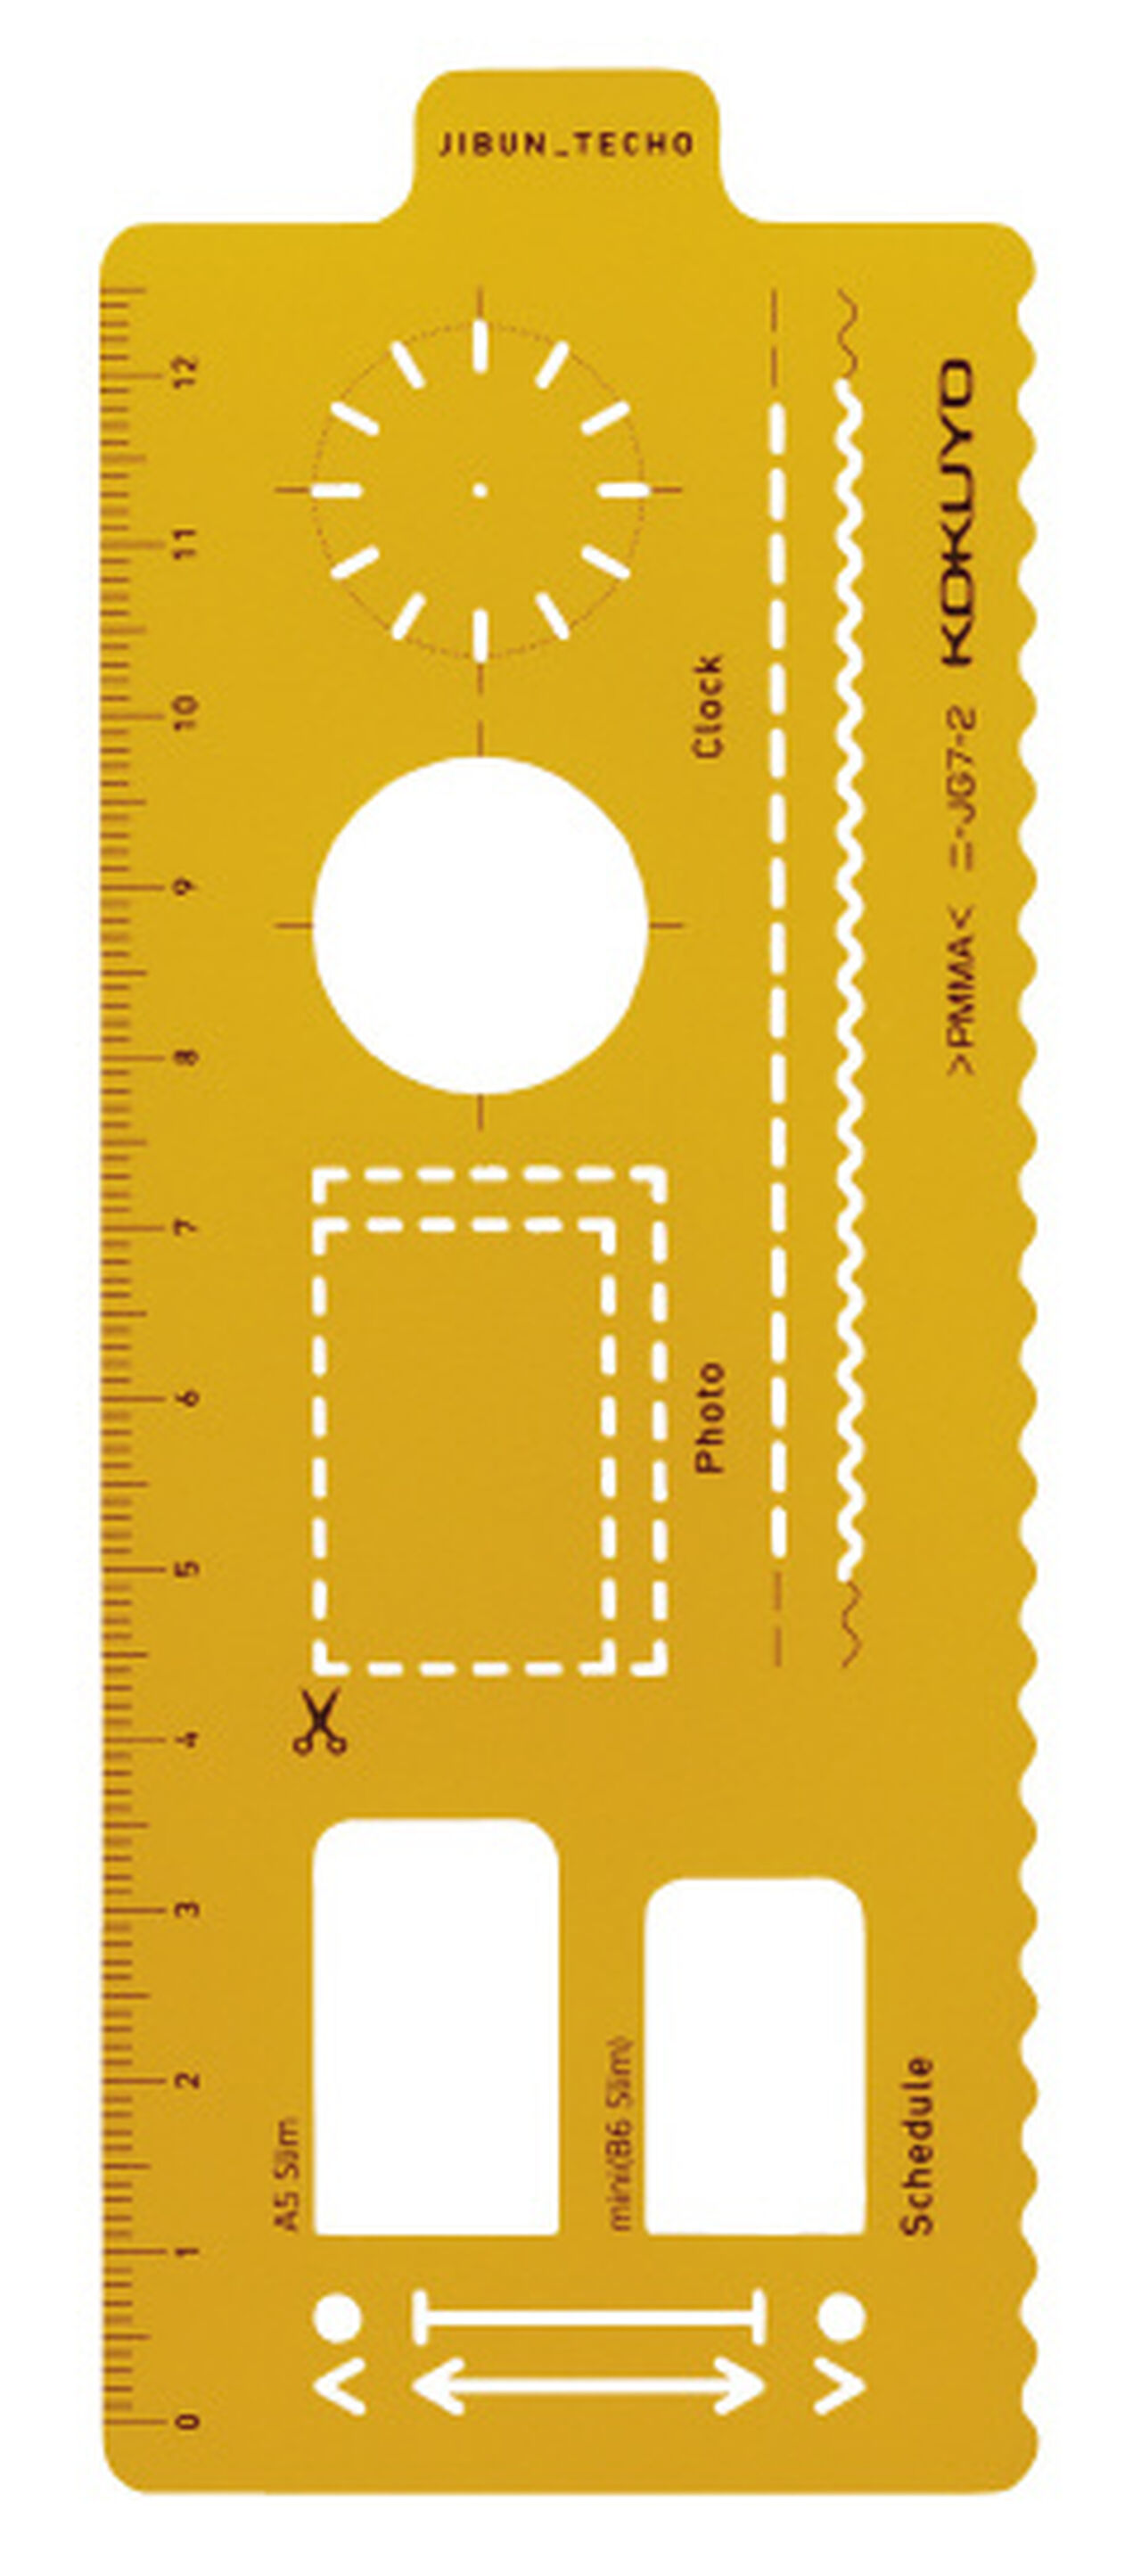  Kokuyo JIBUN_TECHO Goods, Template Stencil, Plan Version,  Shared Size, Orange, Japan Import (NI-JG7-2) : Office Products